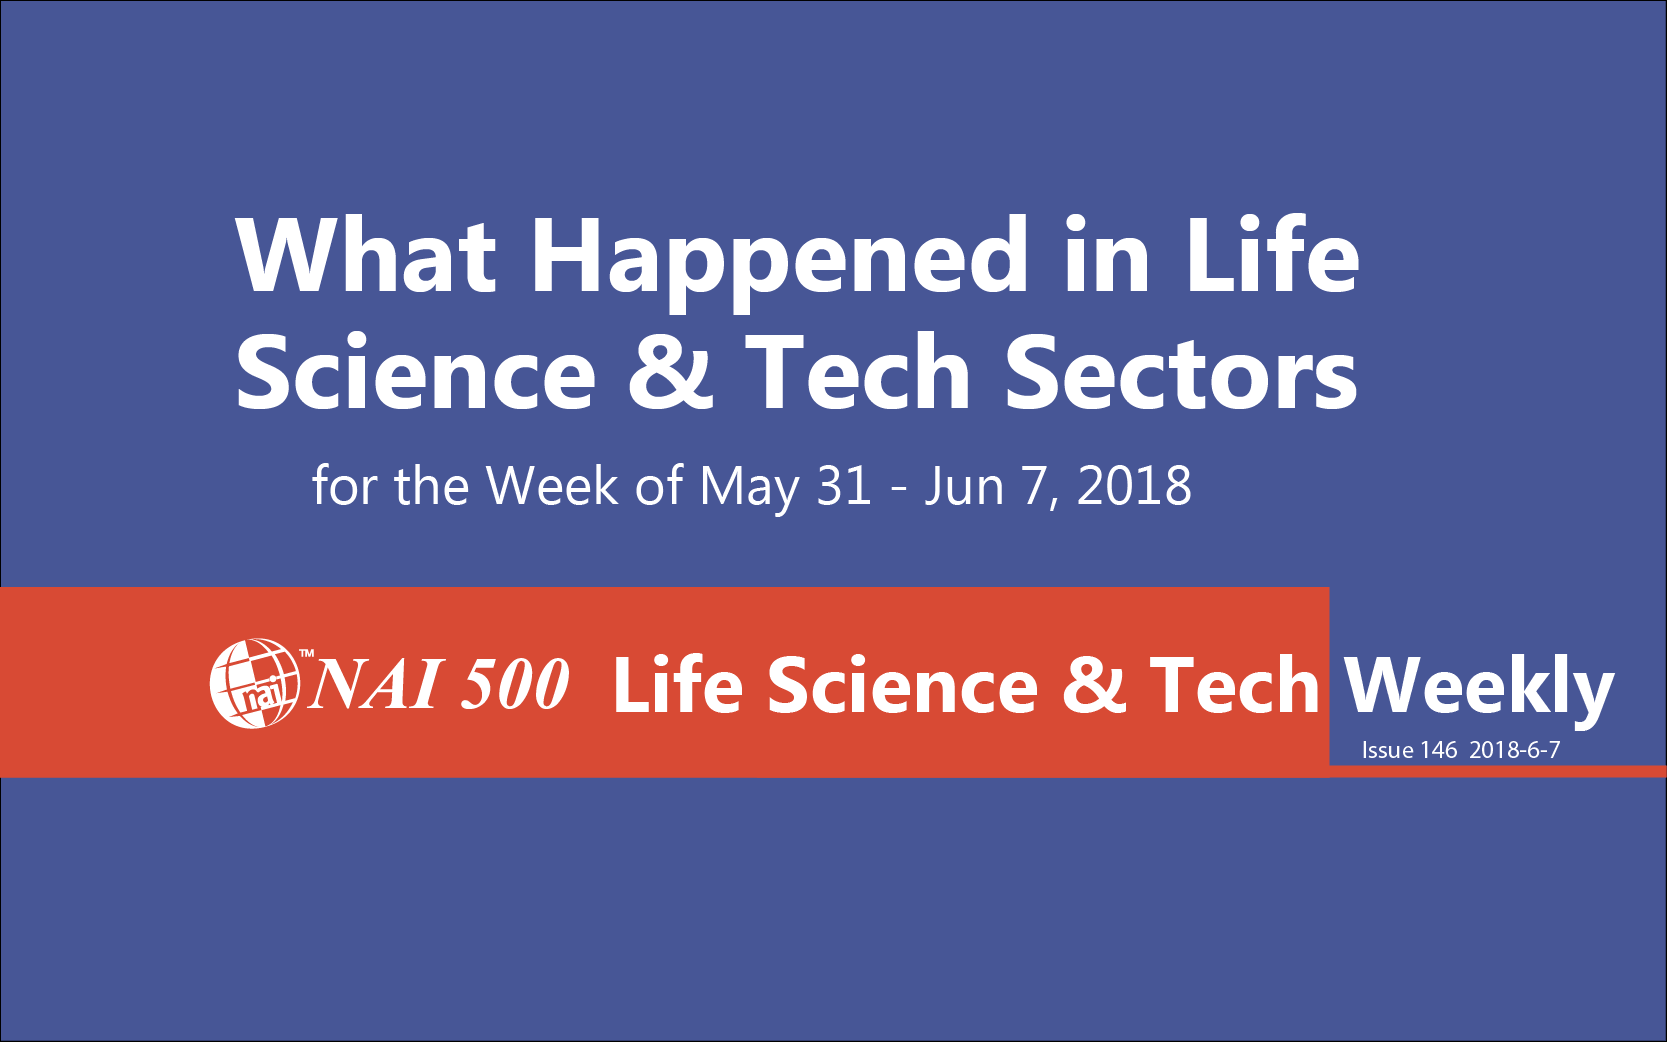 NAI Life Science & Technology - www.nai500.com